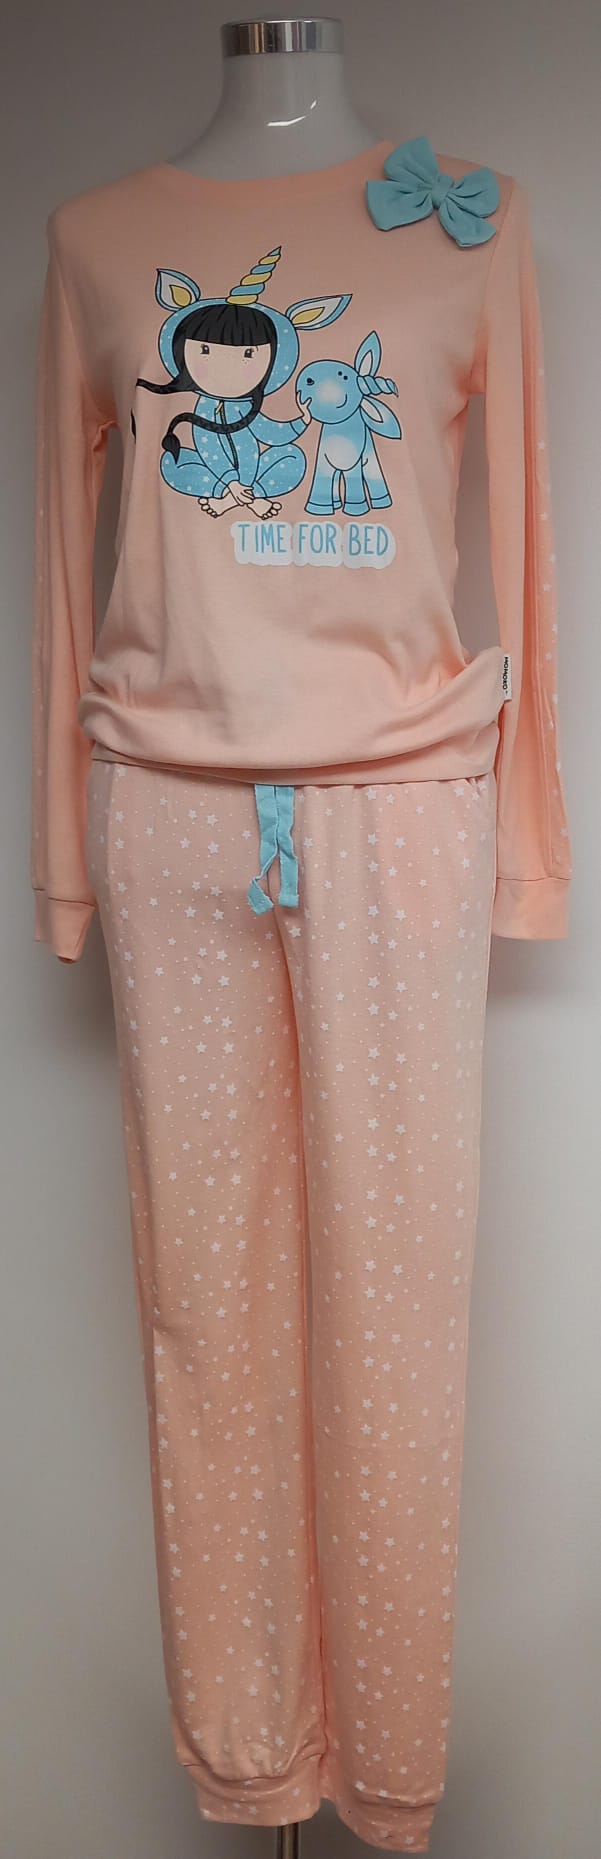 Pijama Lazo Mujer Sugerente